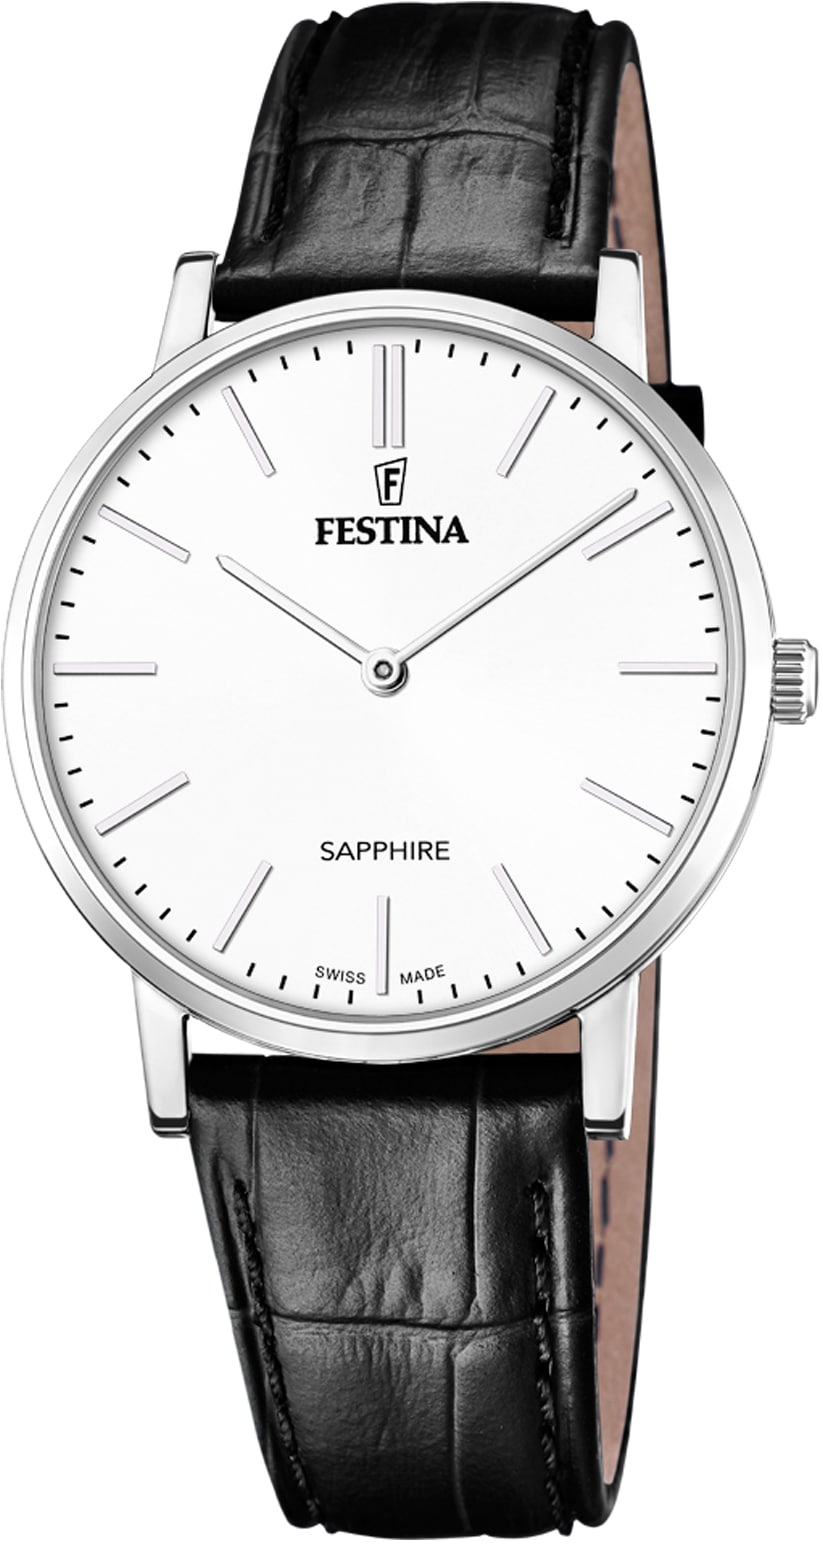 Festina Schweizer Uhr »Festina Swiss Made, F20012/1« bequem bestellen